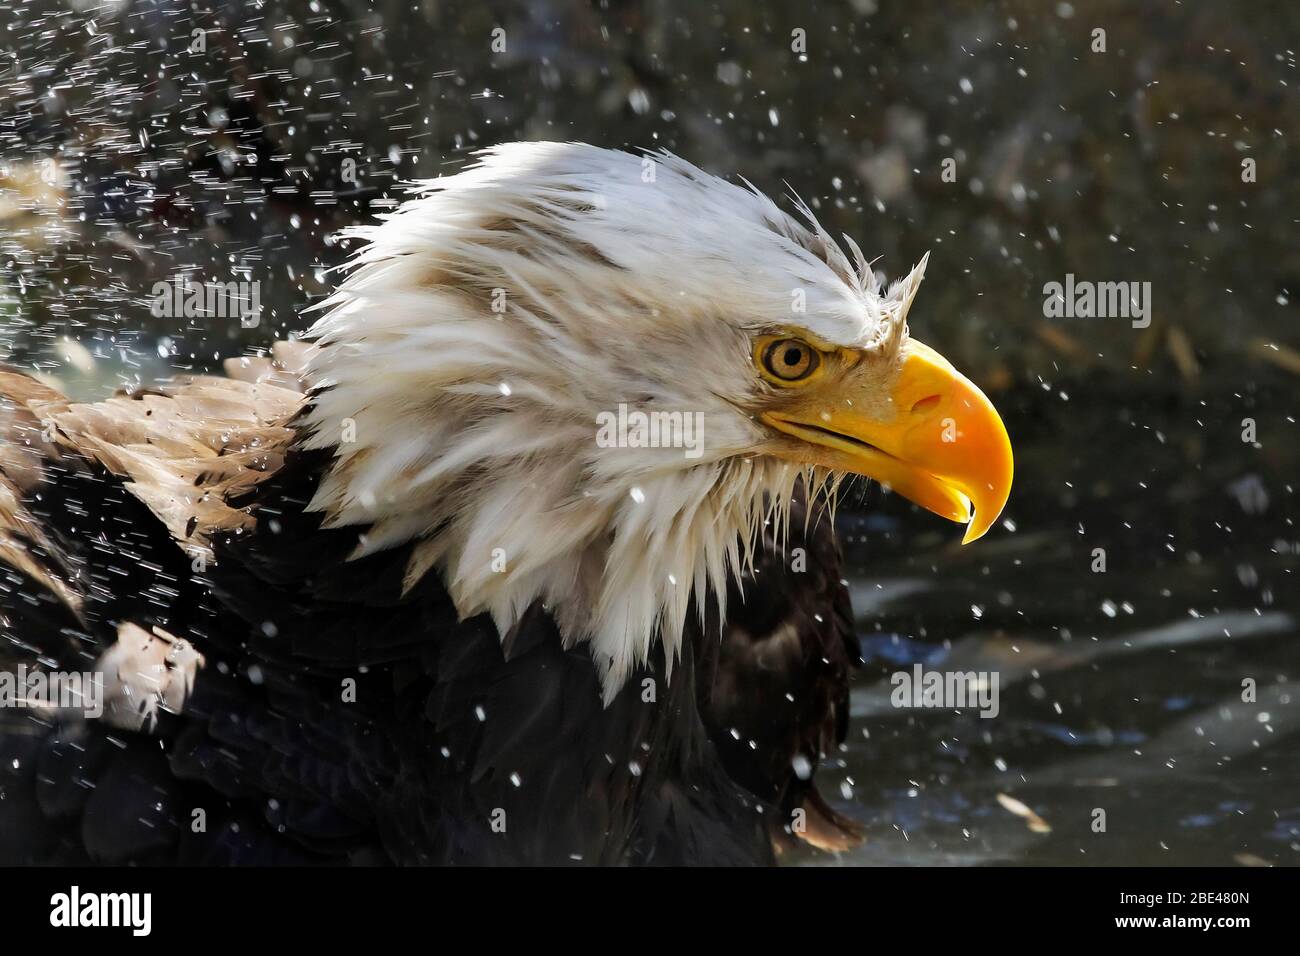 Bald eagle (Haliaeetus leucocephalus) with splashes of water; Denver, Colorado, United States of America Stock Photo